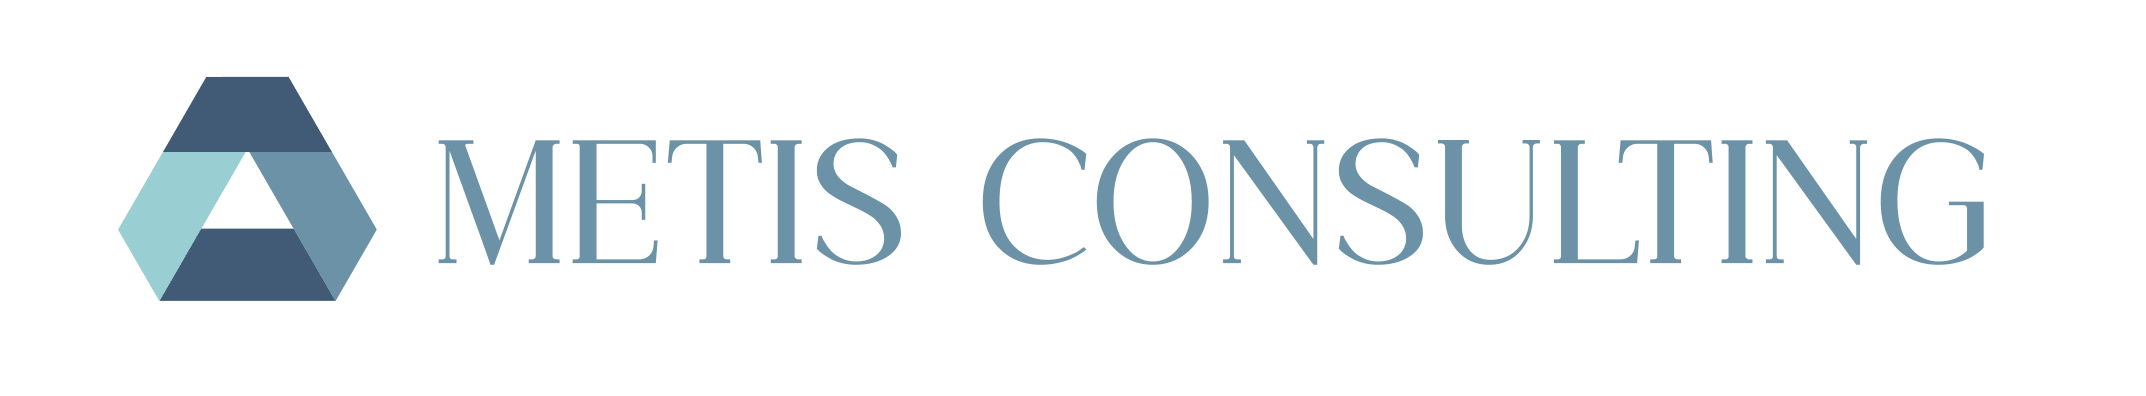 Metis Consulting marketing ügynökség logója